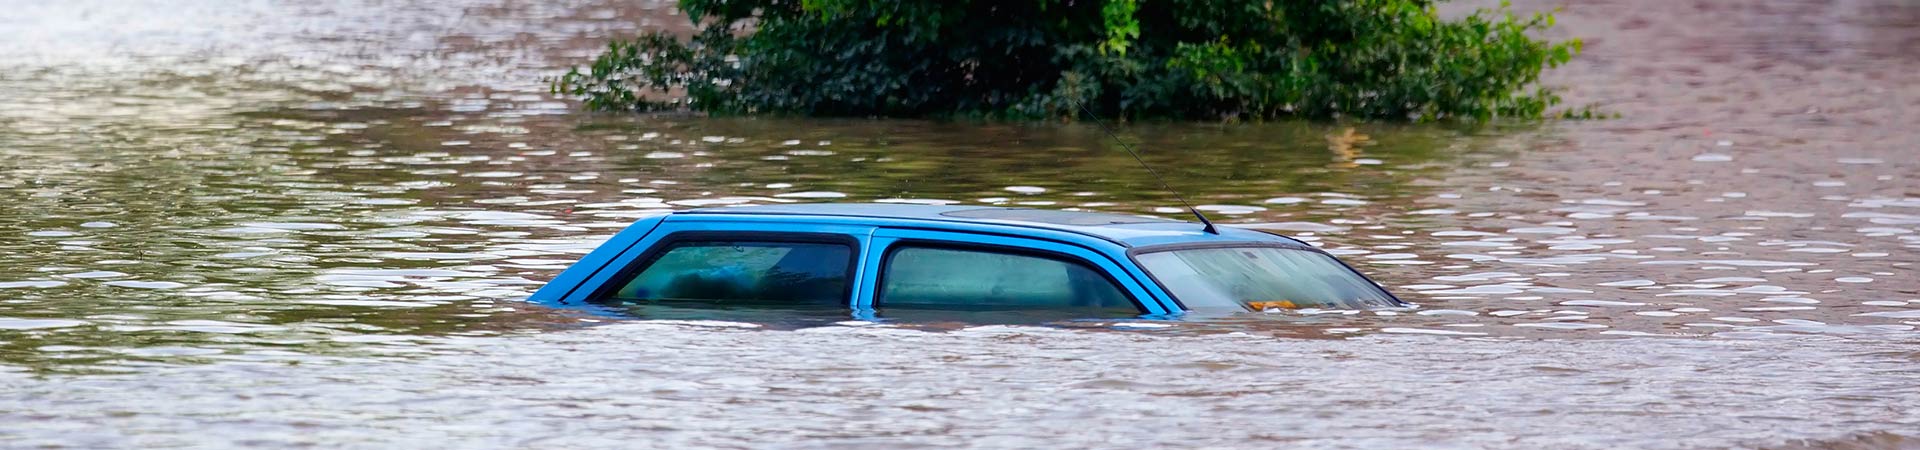 Flood Insurance in Beaumont TX, Houston, League City, Missouri City